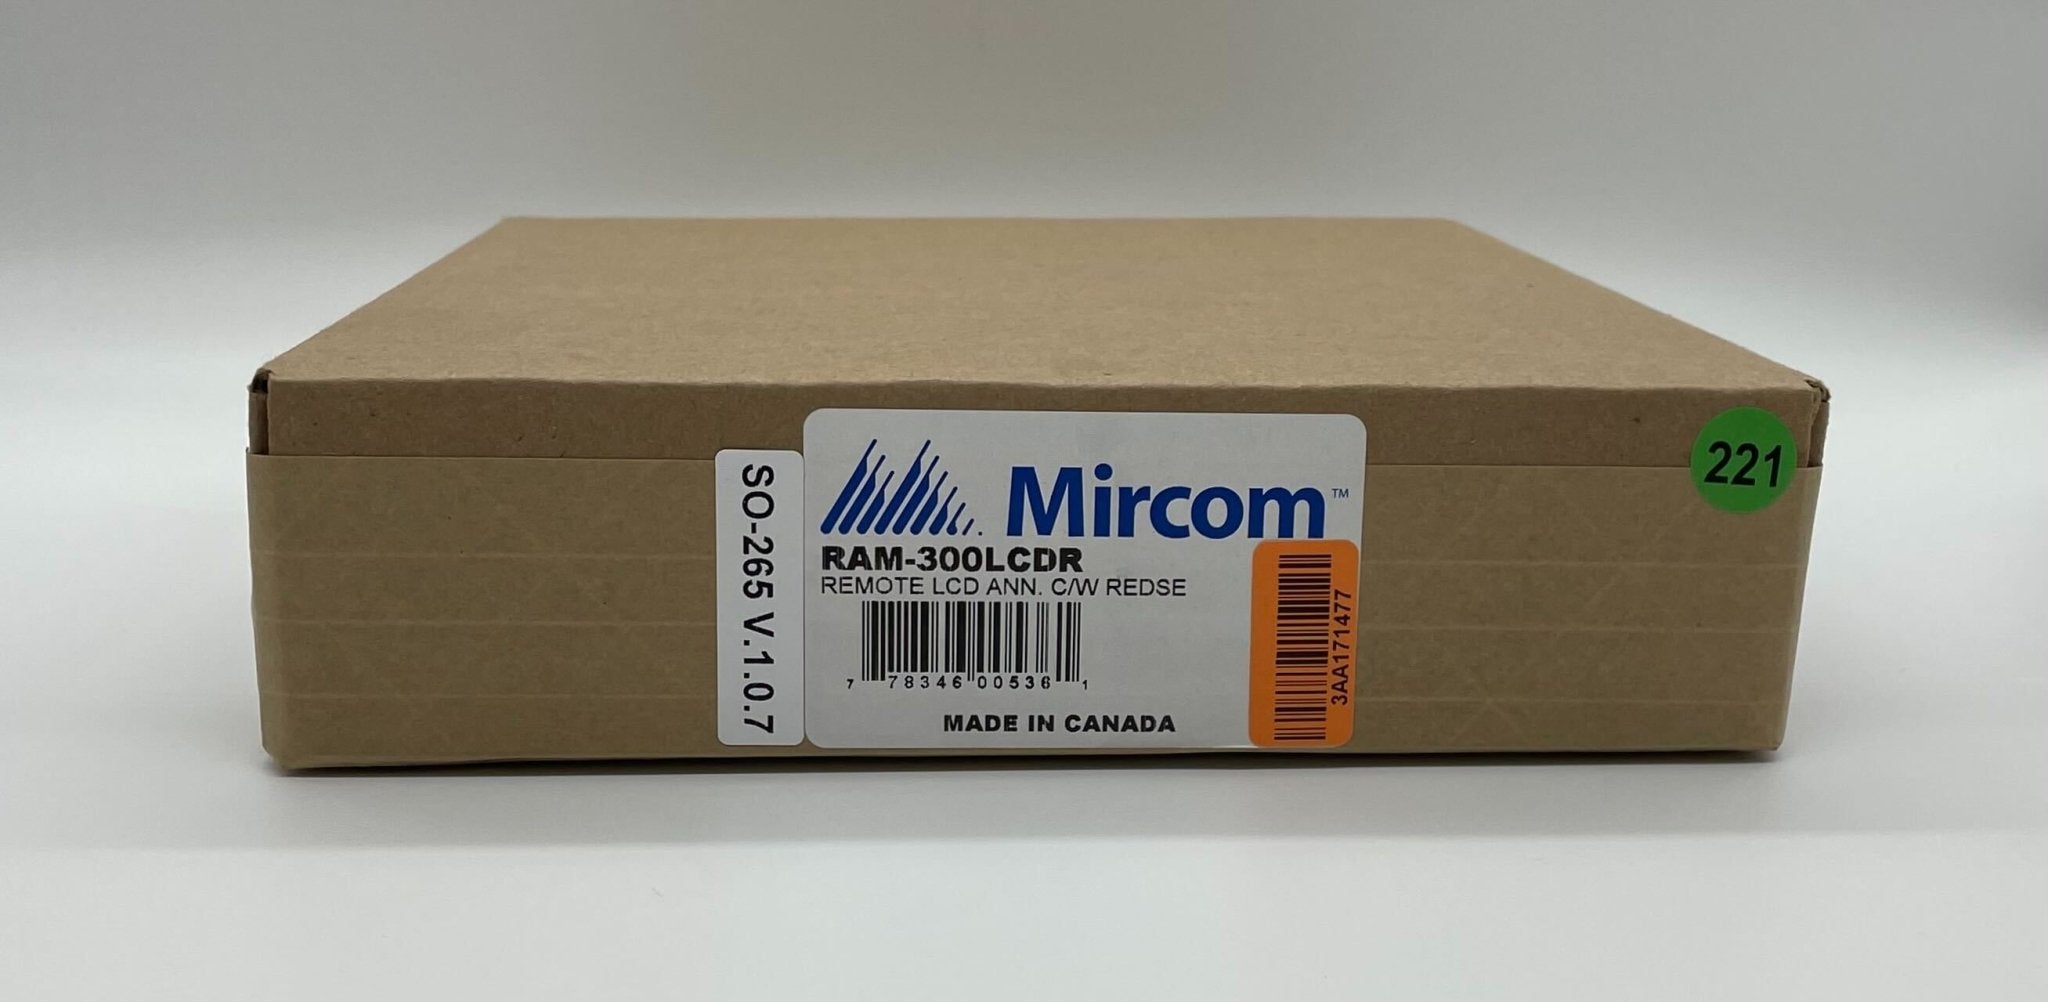 Mircom RAM-300LCDR - The Fire Alarm Supplier